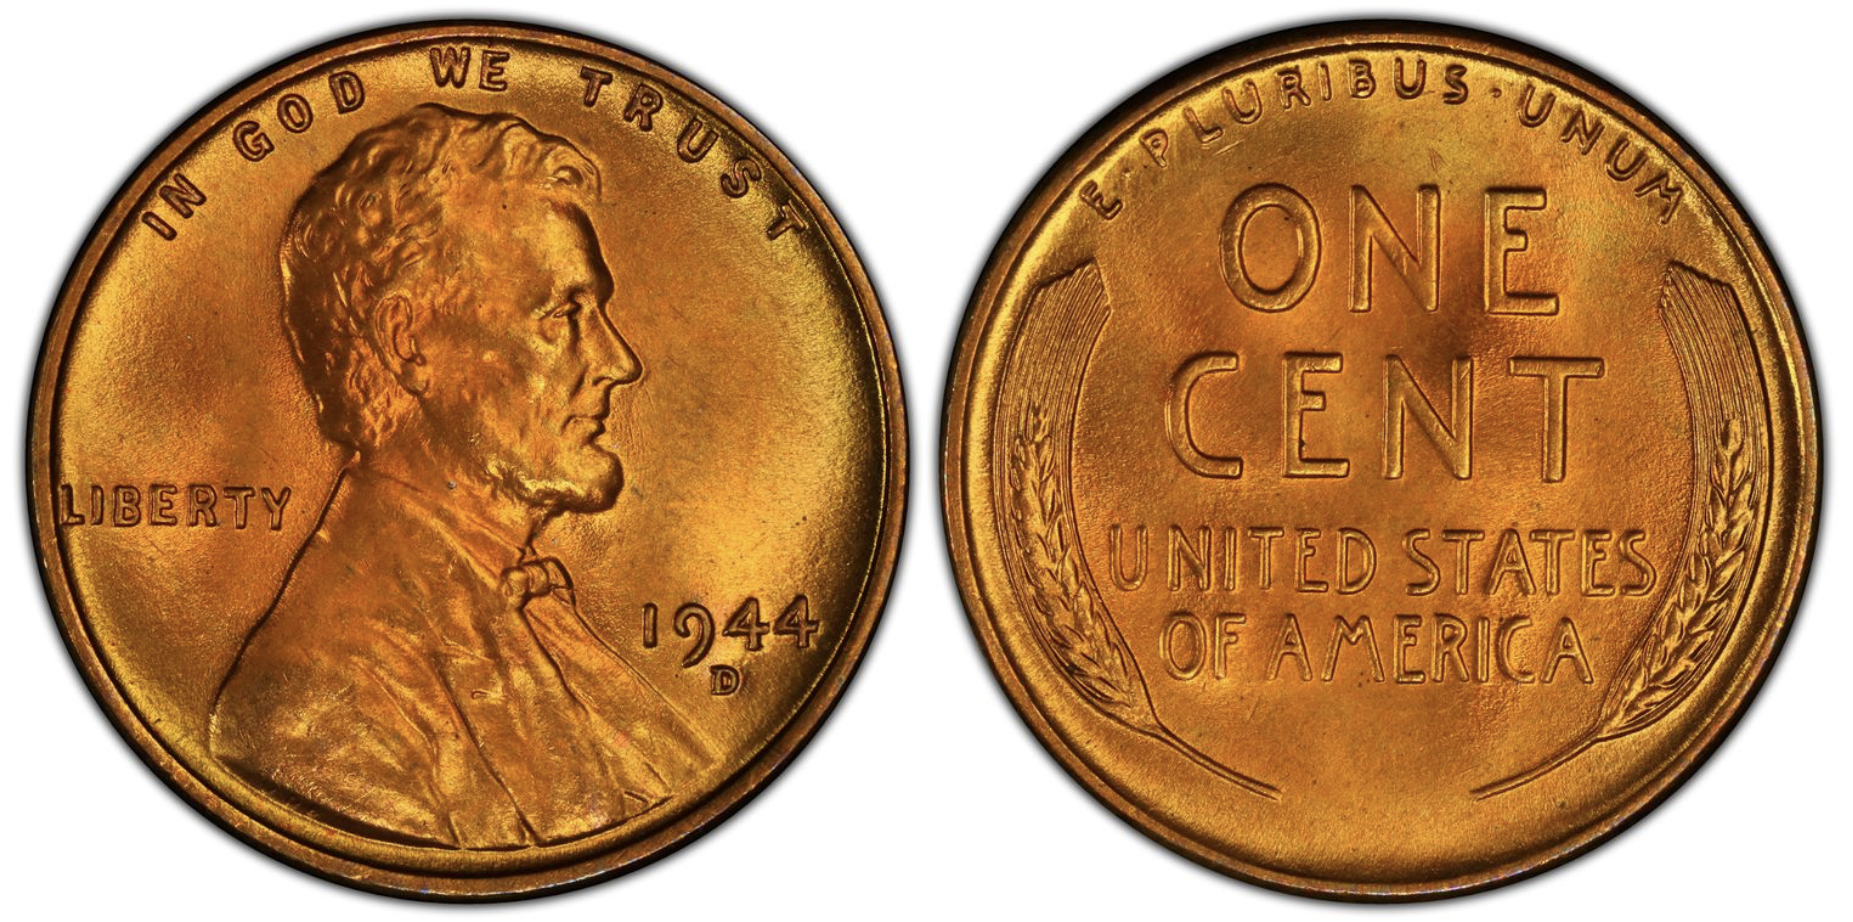 1944 Wheat Penny value